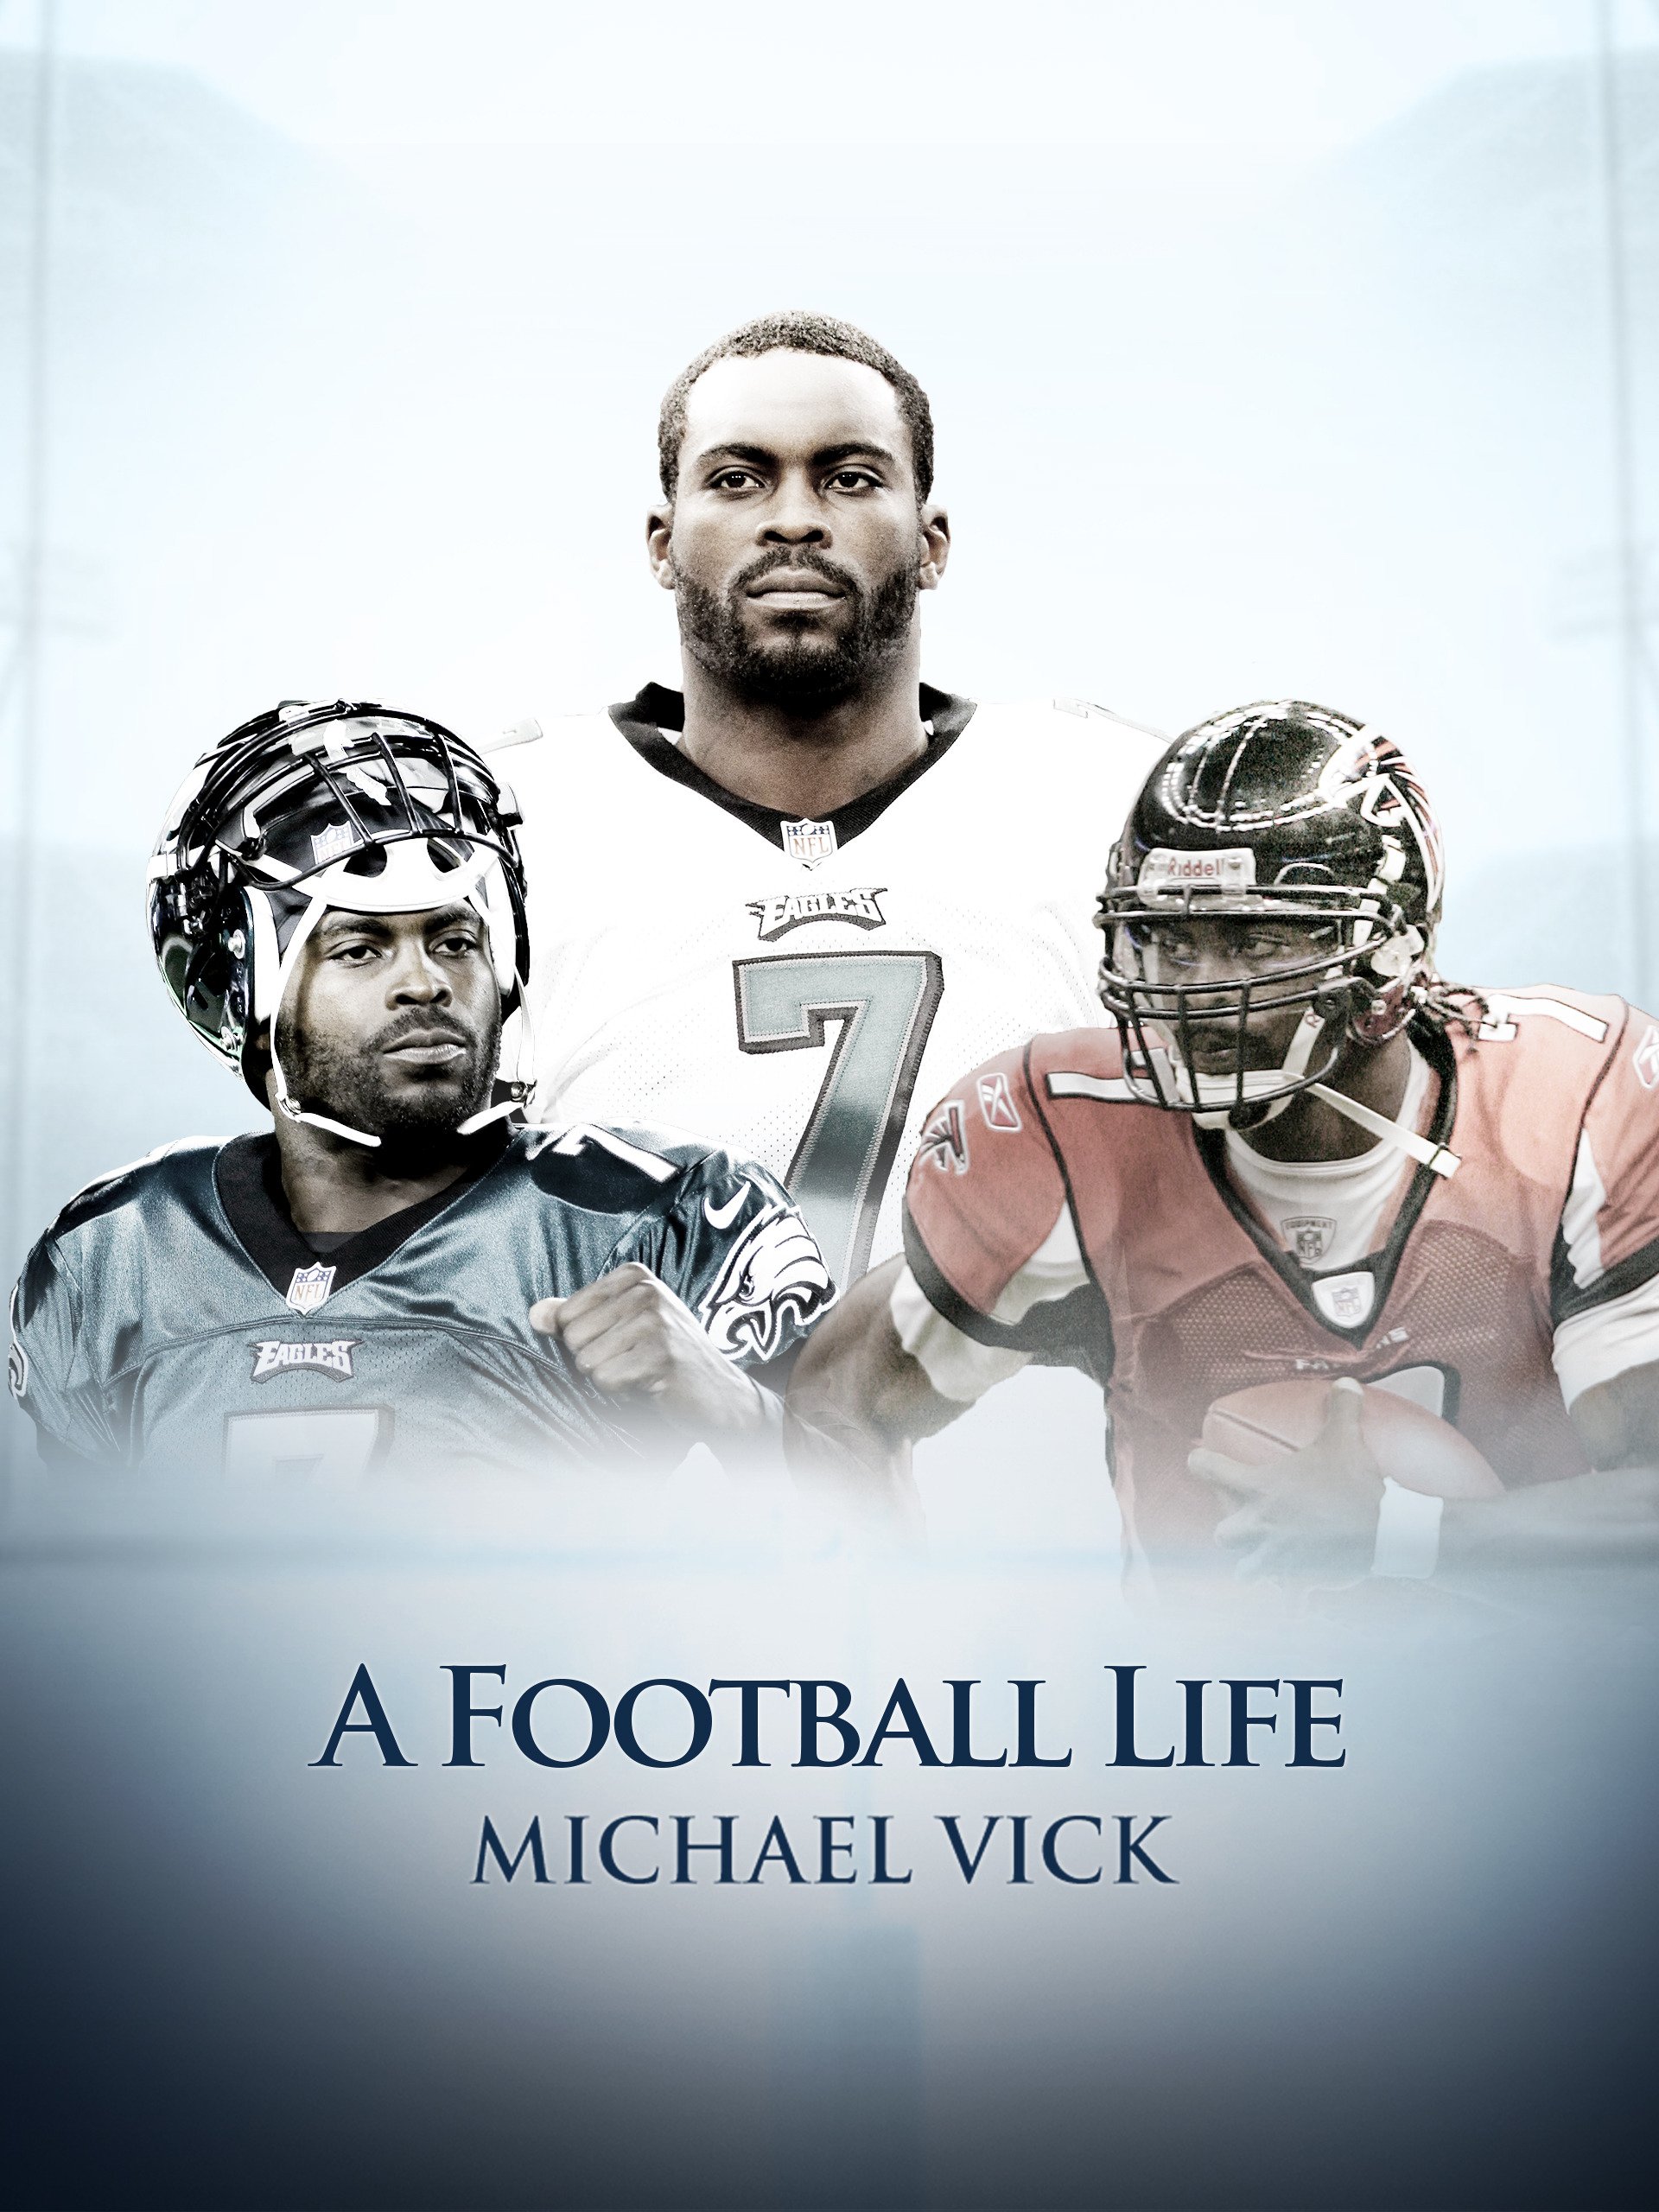 Football Life Michael Vick - HD Wallpaper 